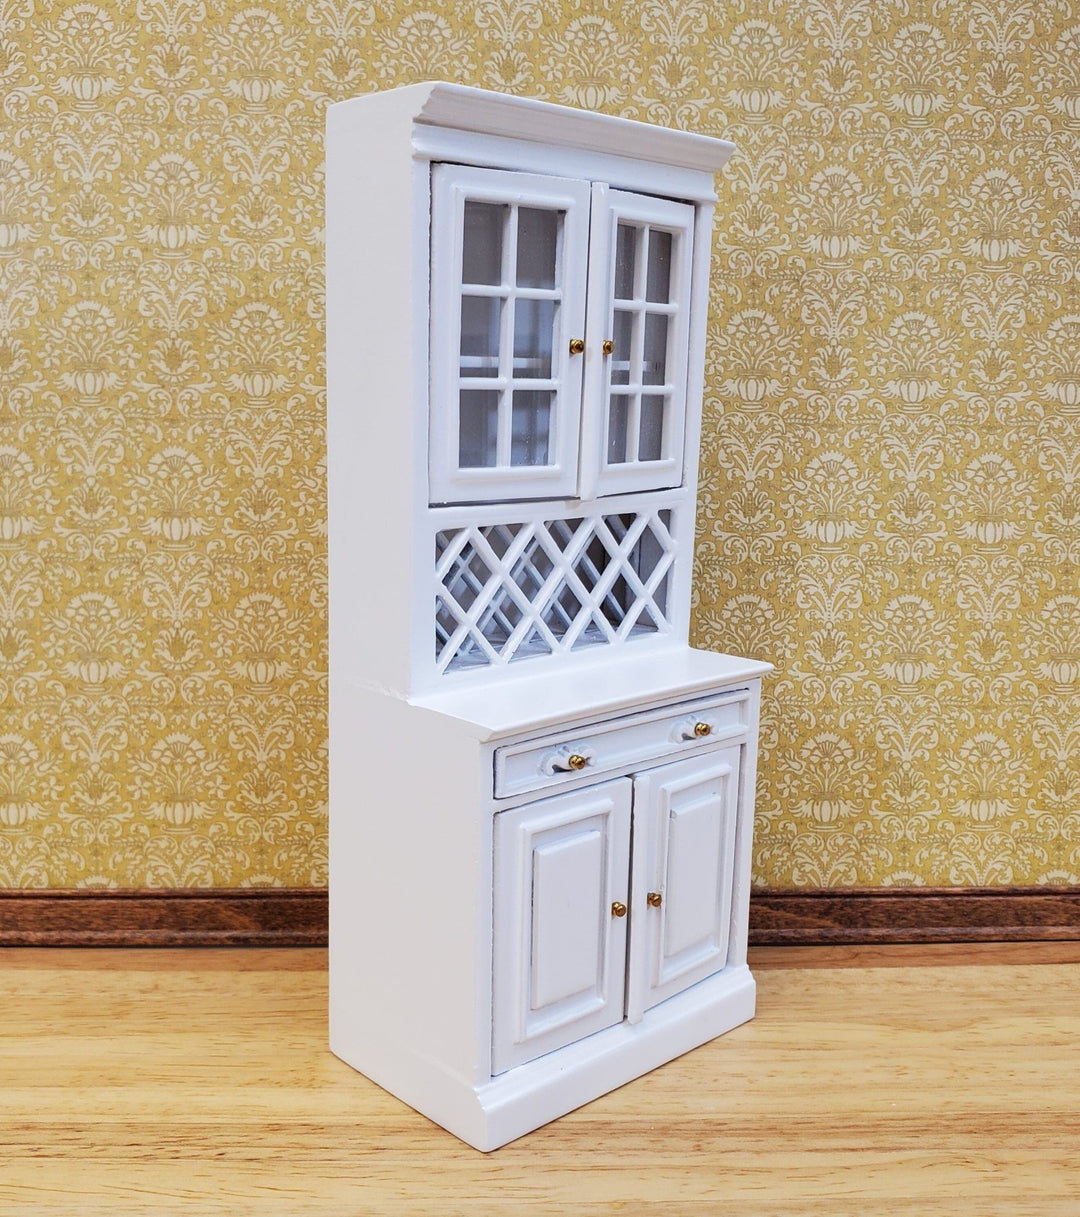 Dollhouse Cabinet Hutch with Wine Rack White Finish 1:12 Scale Miniature Furniture - Miniature Crush